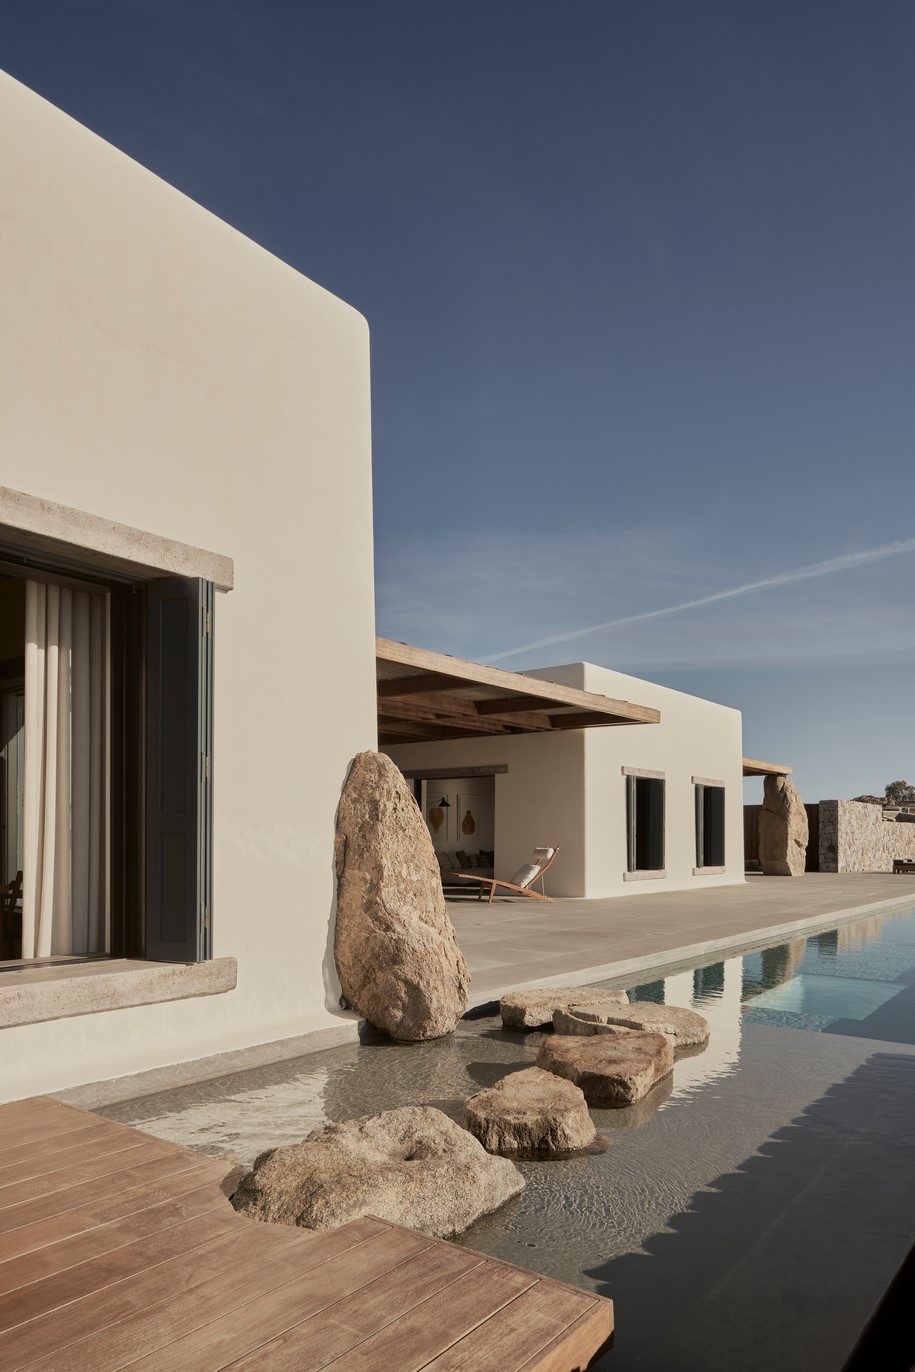 Archisearch K- Studio designed Villa Mandra in Mykonos, Greece upon the idea of slow, laid-back summer living